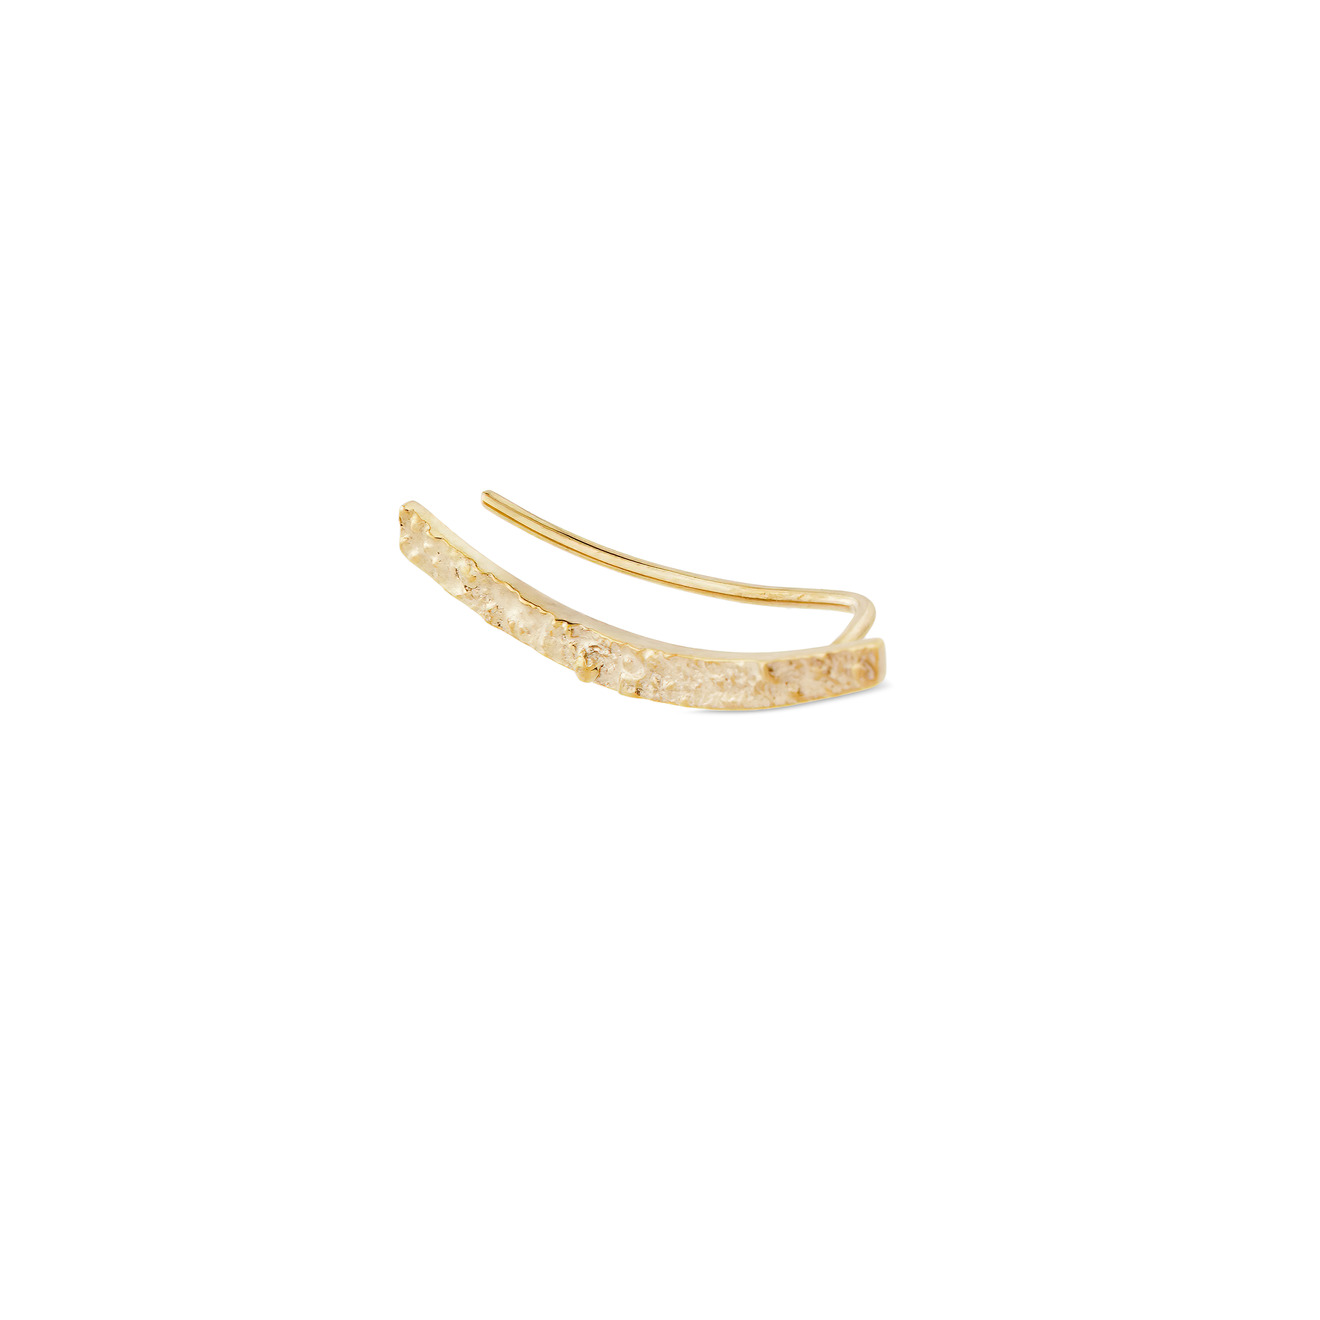 УРА jewelry Позолоченный клаймбер из серебра на правое ухо